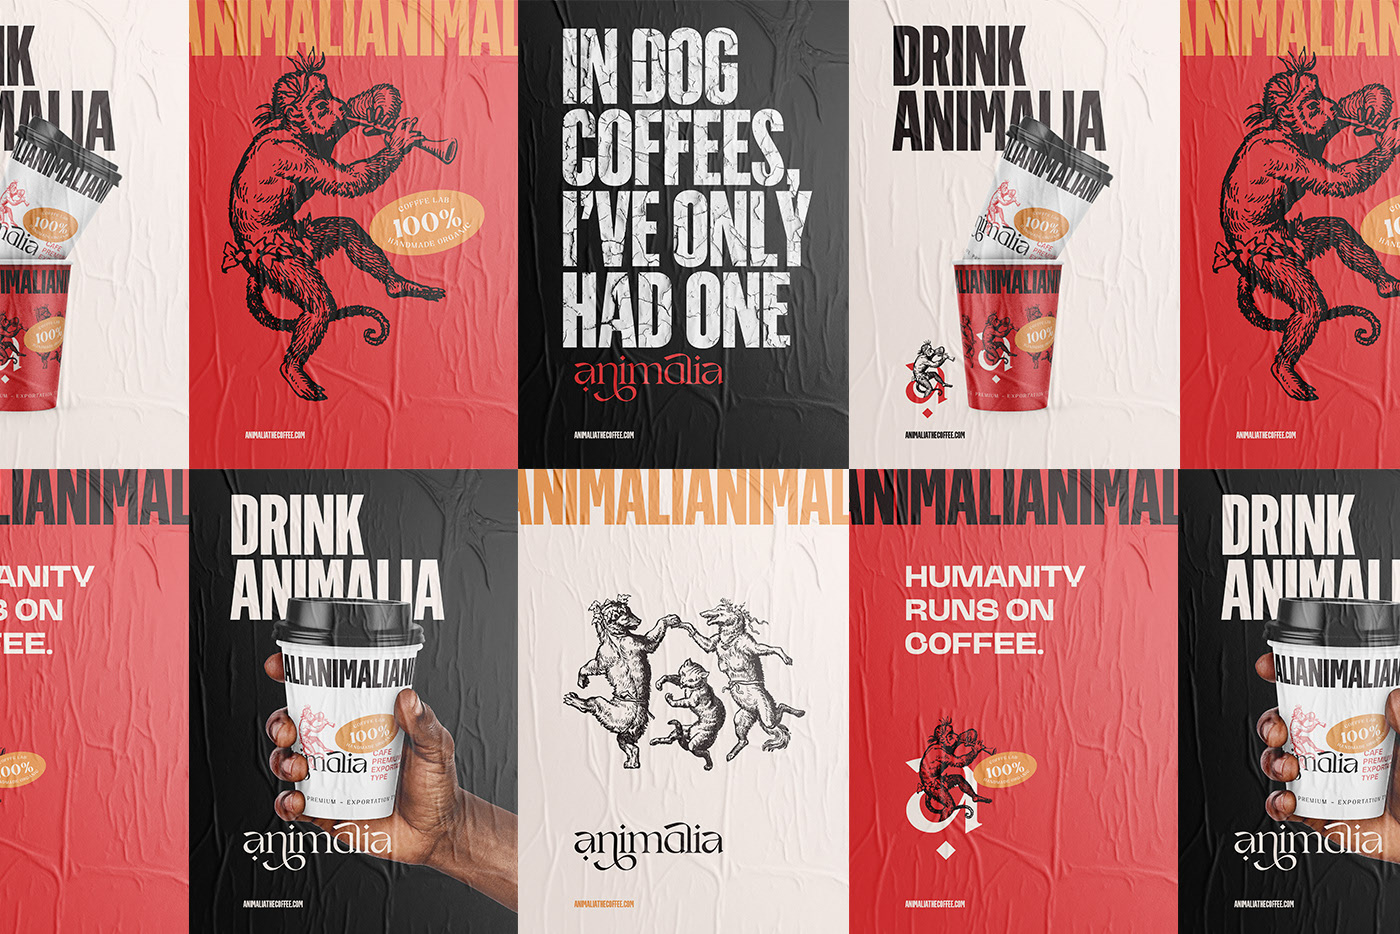 Animalia coffee branding and packaging design by Matheus Cornelius